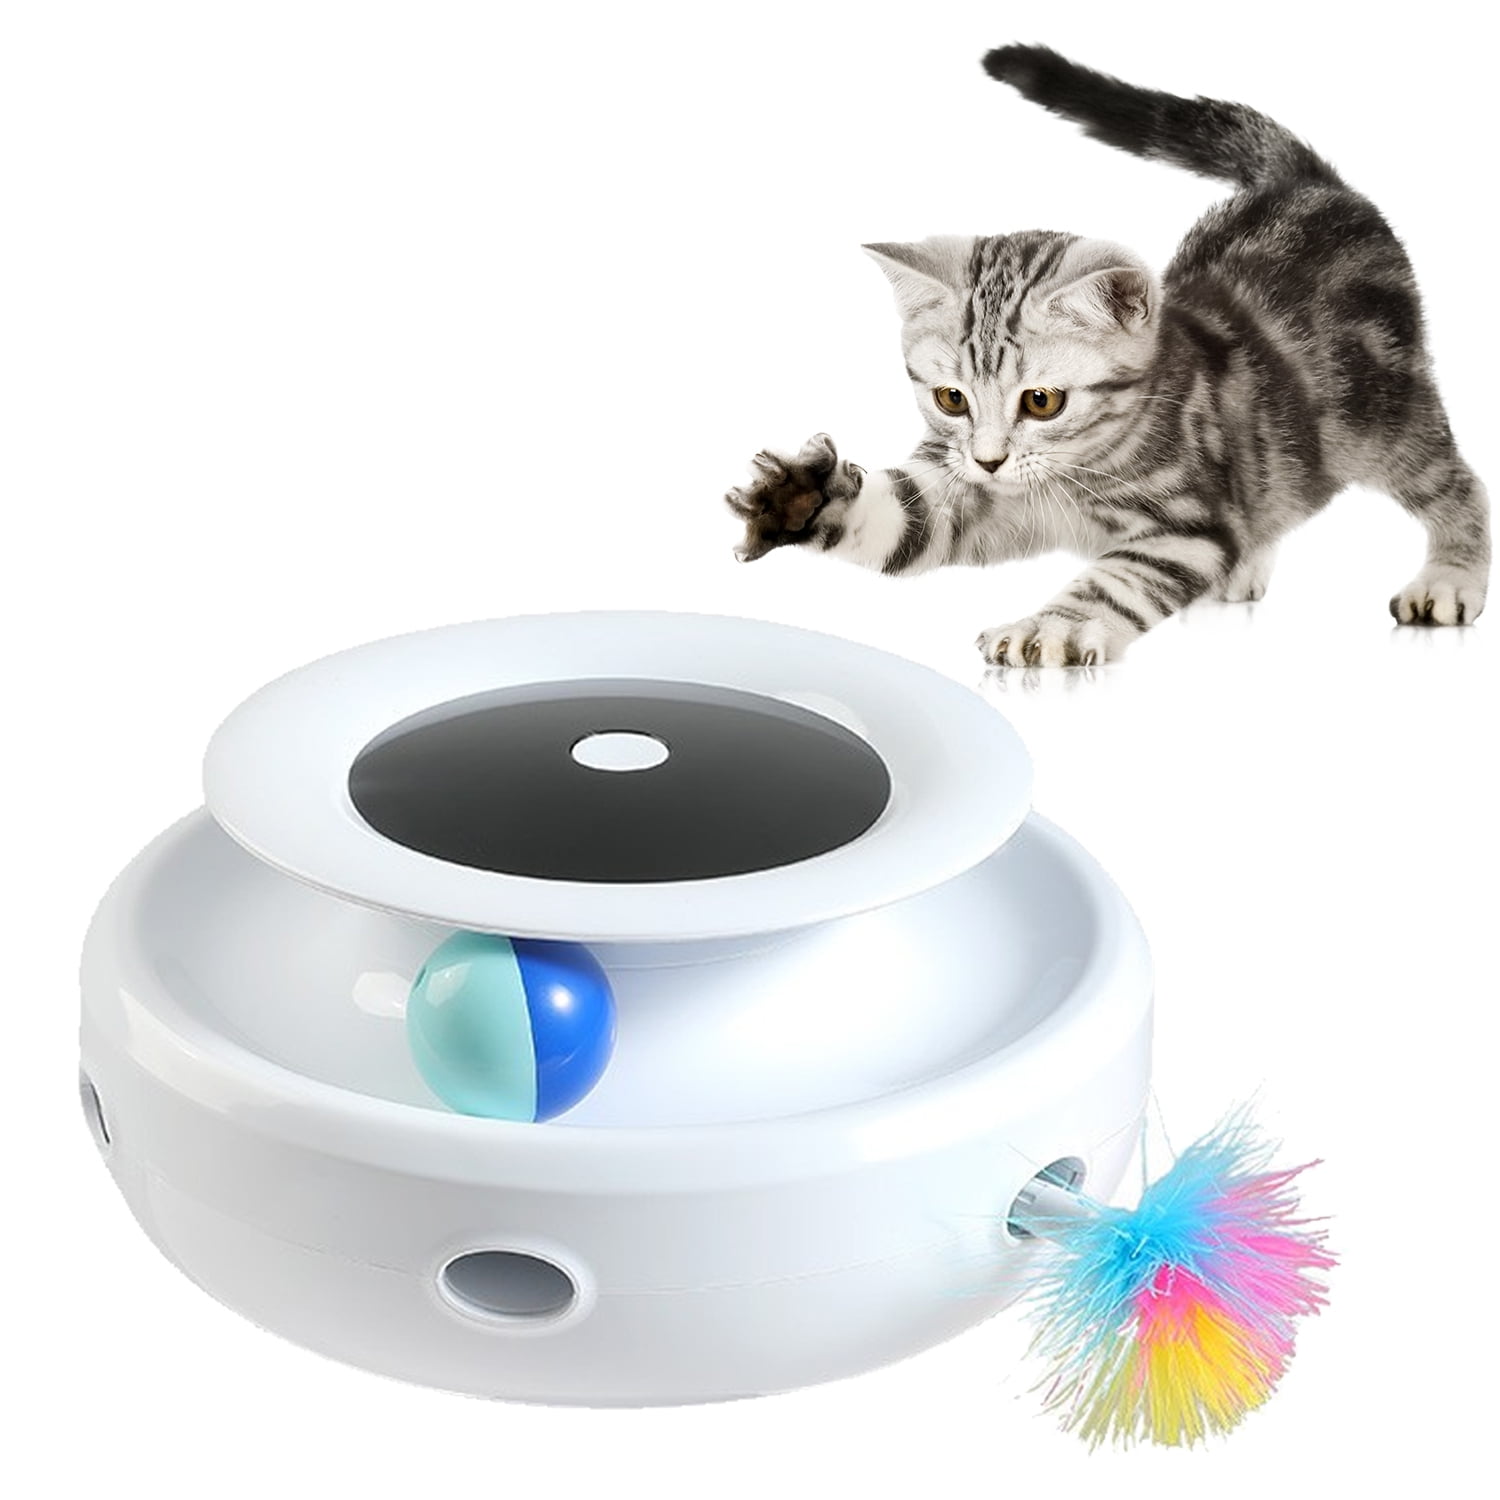 Cat toys – Giselle & Momo